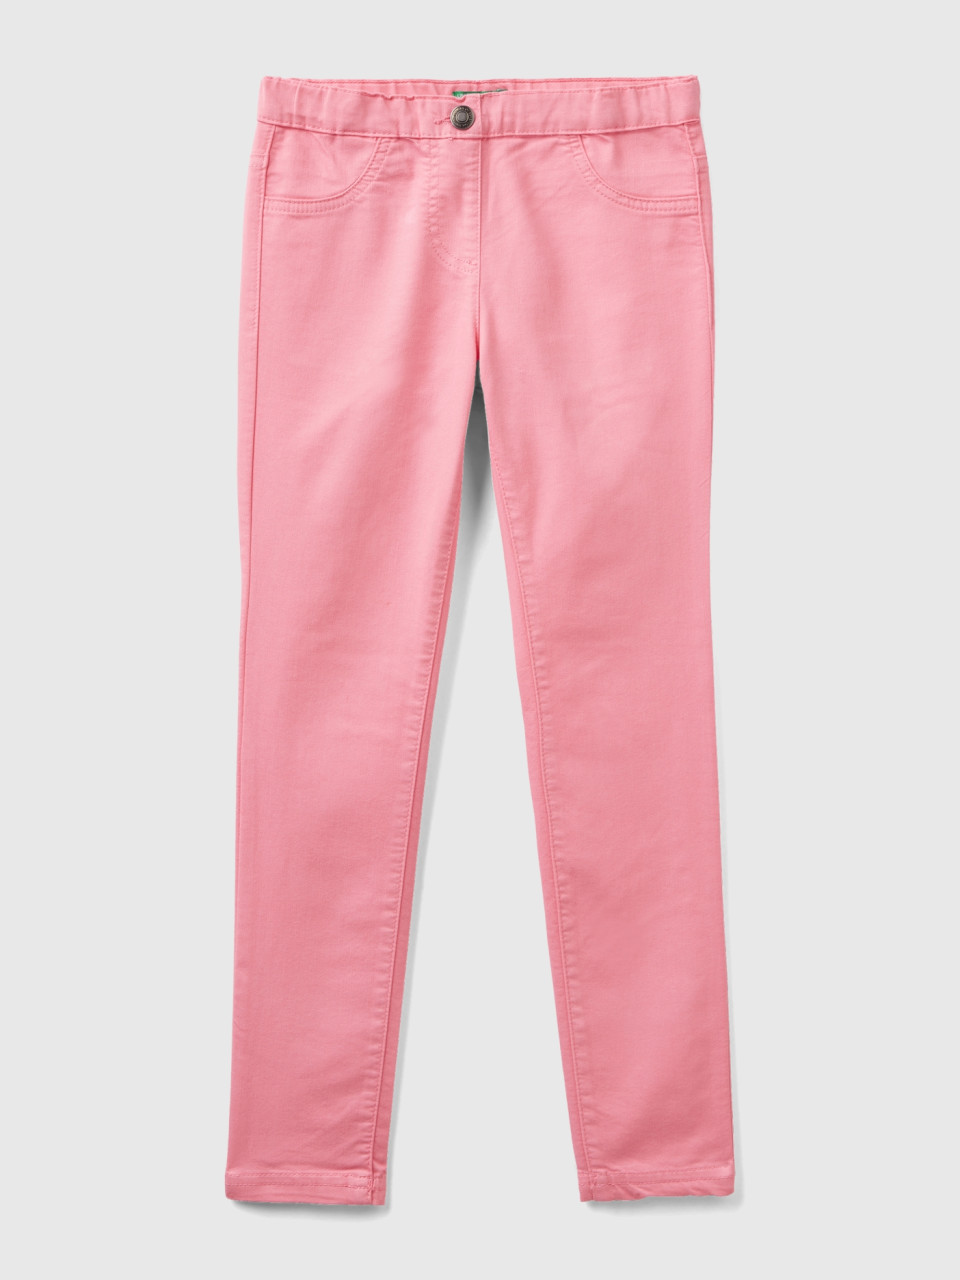 Benetton, Super Skinny Trousers, Pink, Kids